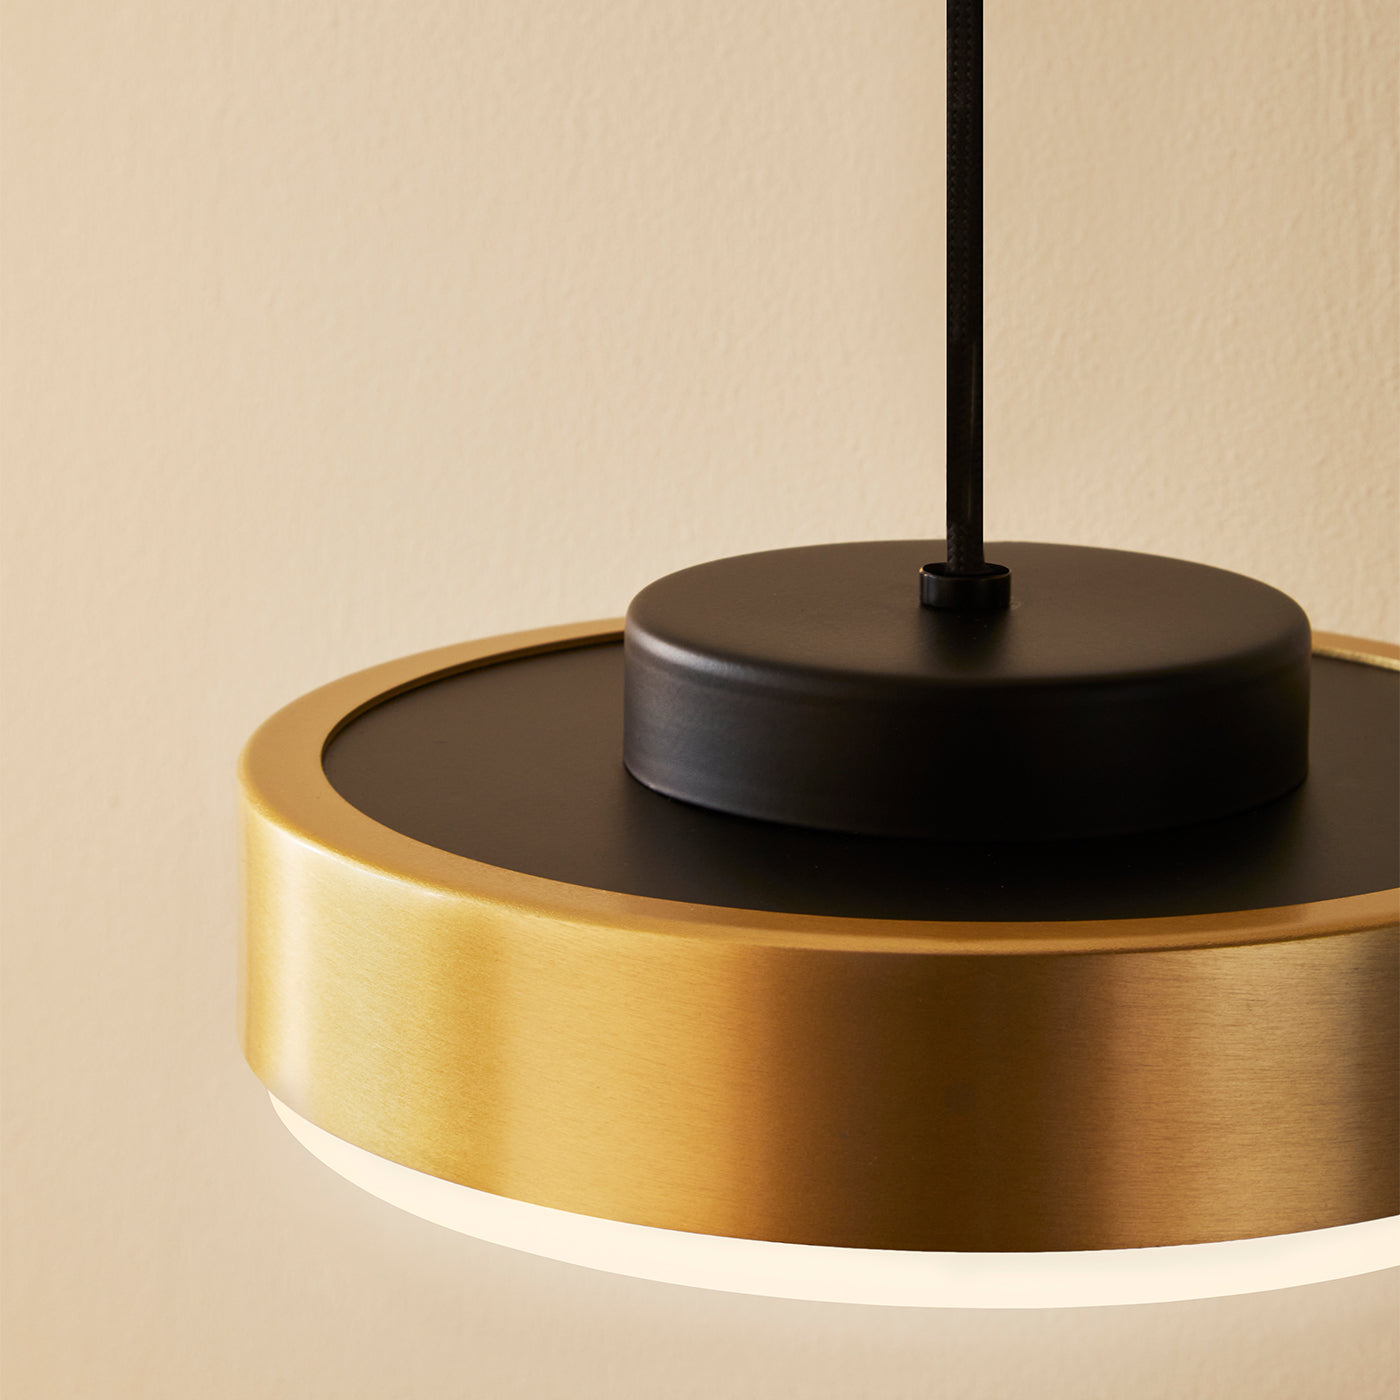 Discus SO Small Brass & Black Pendant Lamp by MKV Design - Alternative view 1